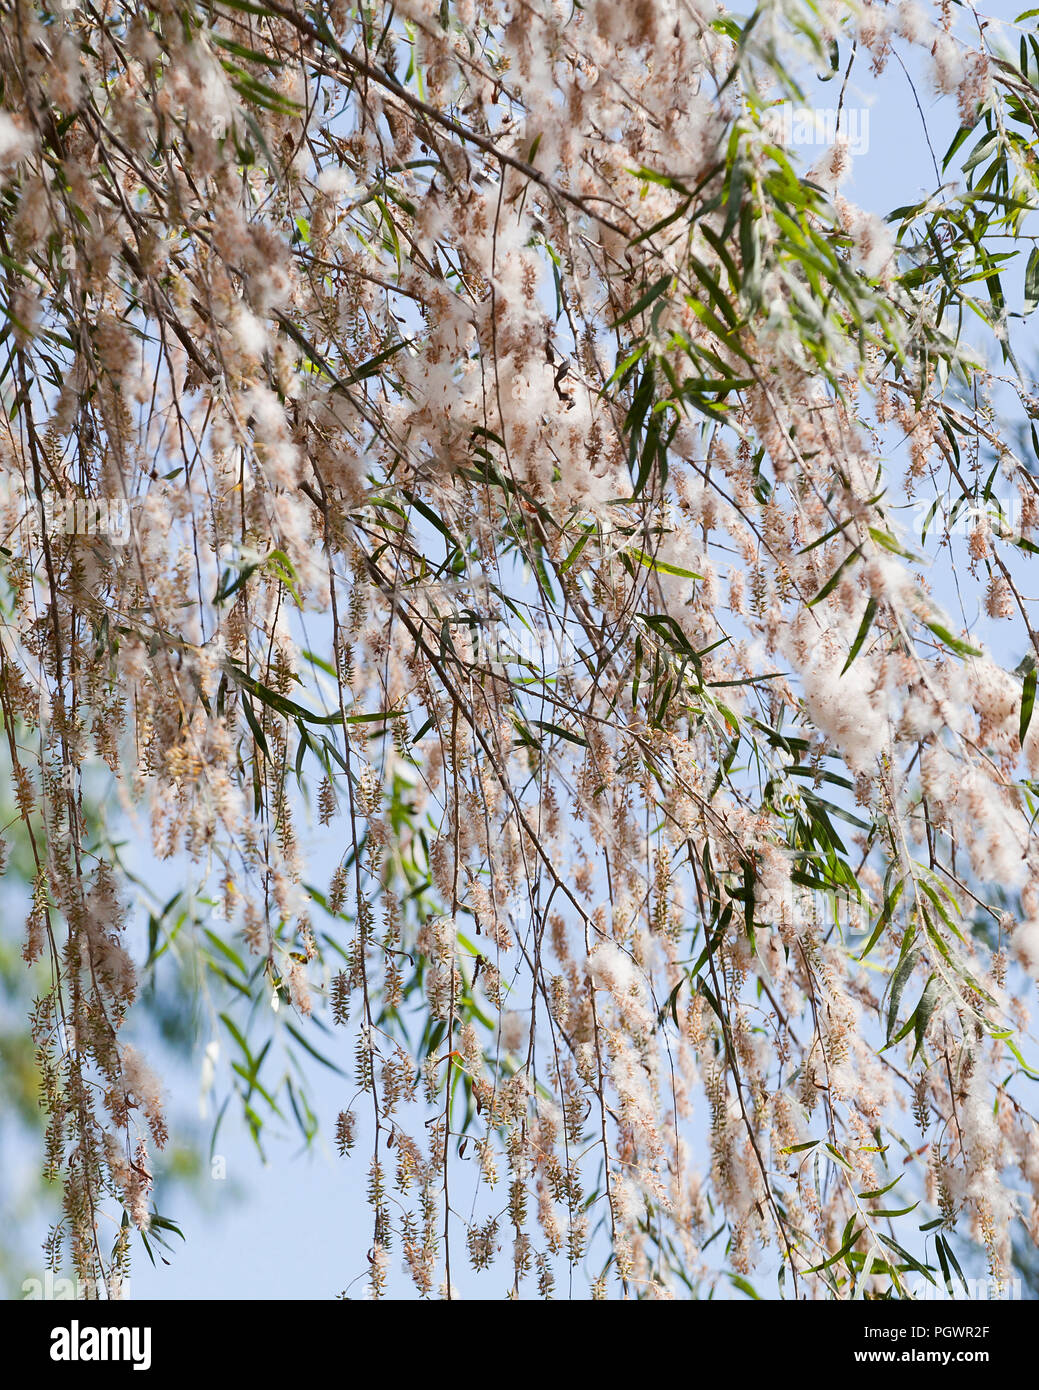 Black willow tree (Salix nigra) shedding cotton-like seeds in summer - California USA Stock Photo